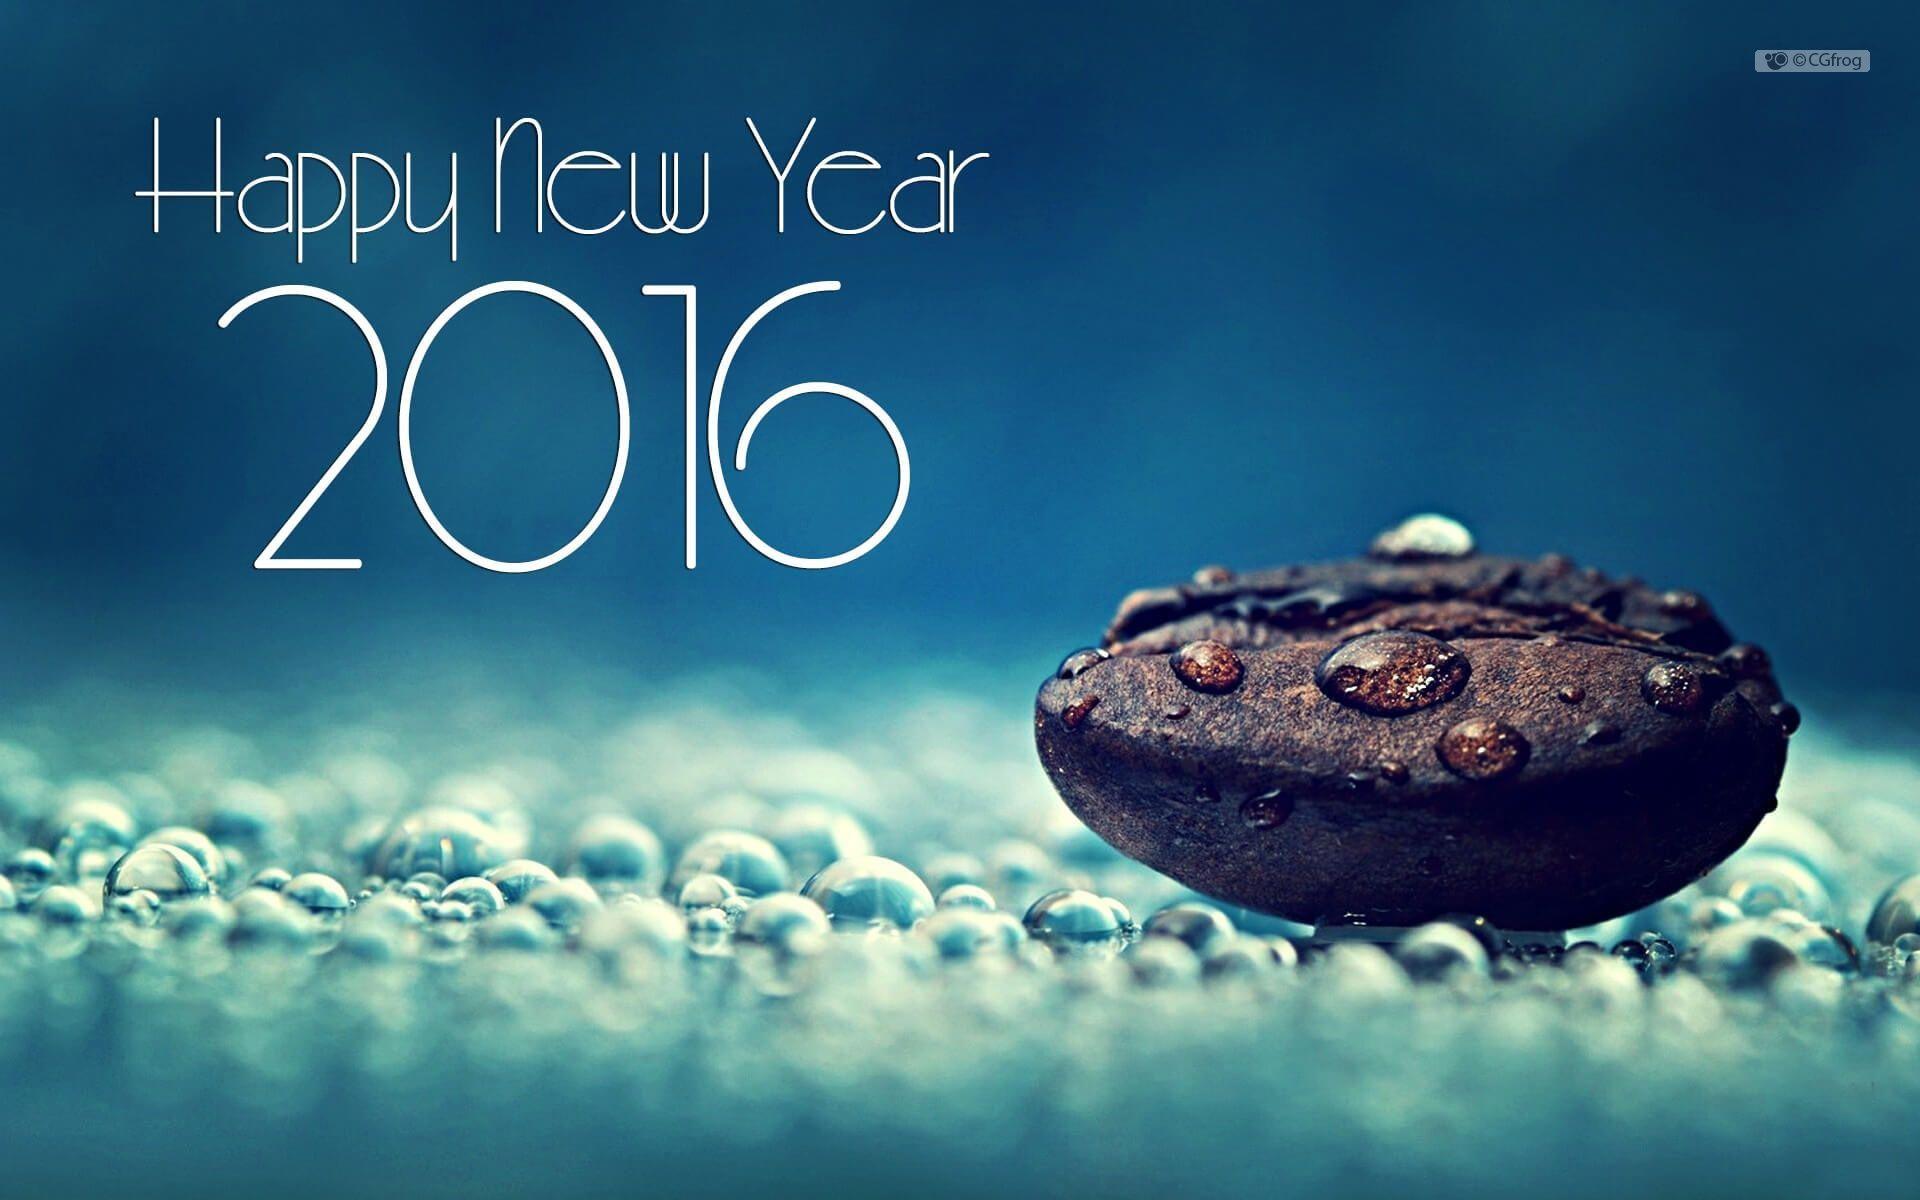 Best Happy New Year 2016 HD Wallpaper CGfrog